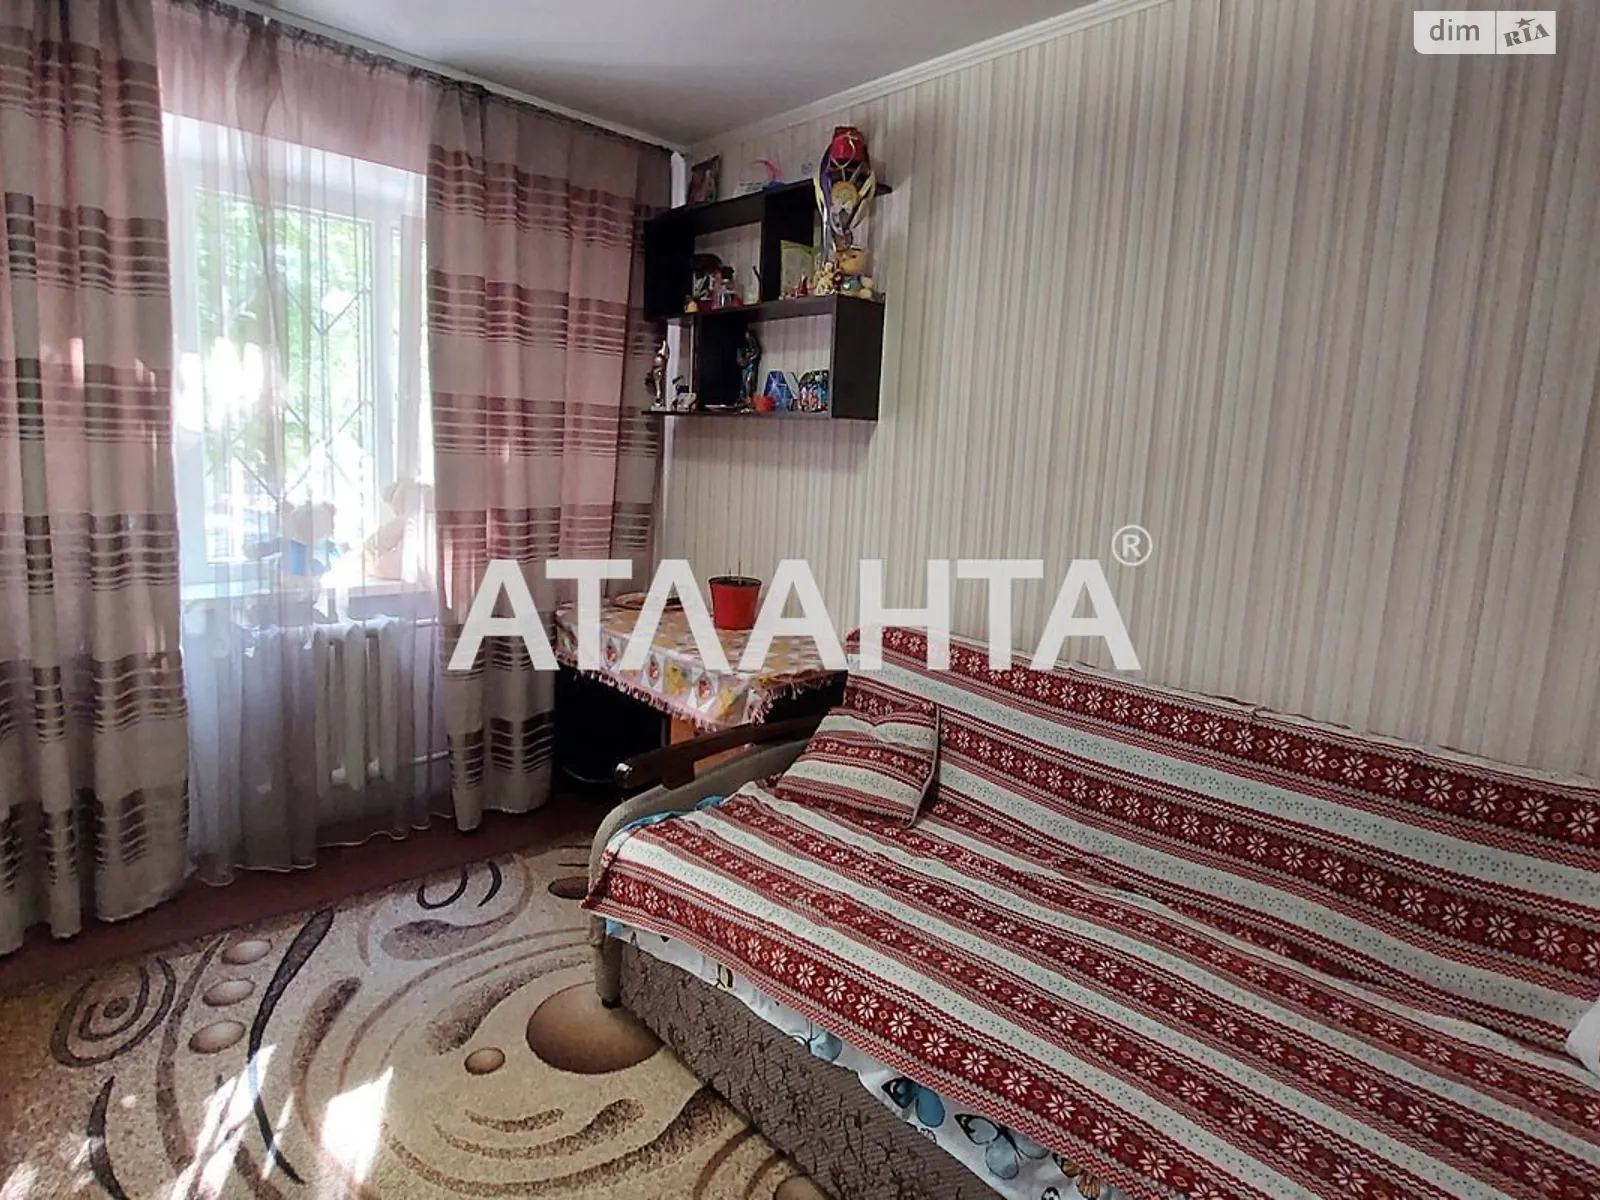 Продается комната 12 кв. м в Одессе, цена: 7300 $ - фото 1